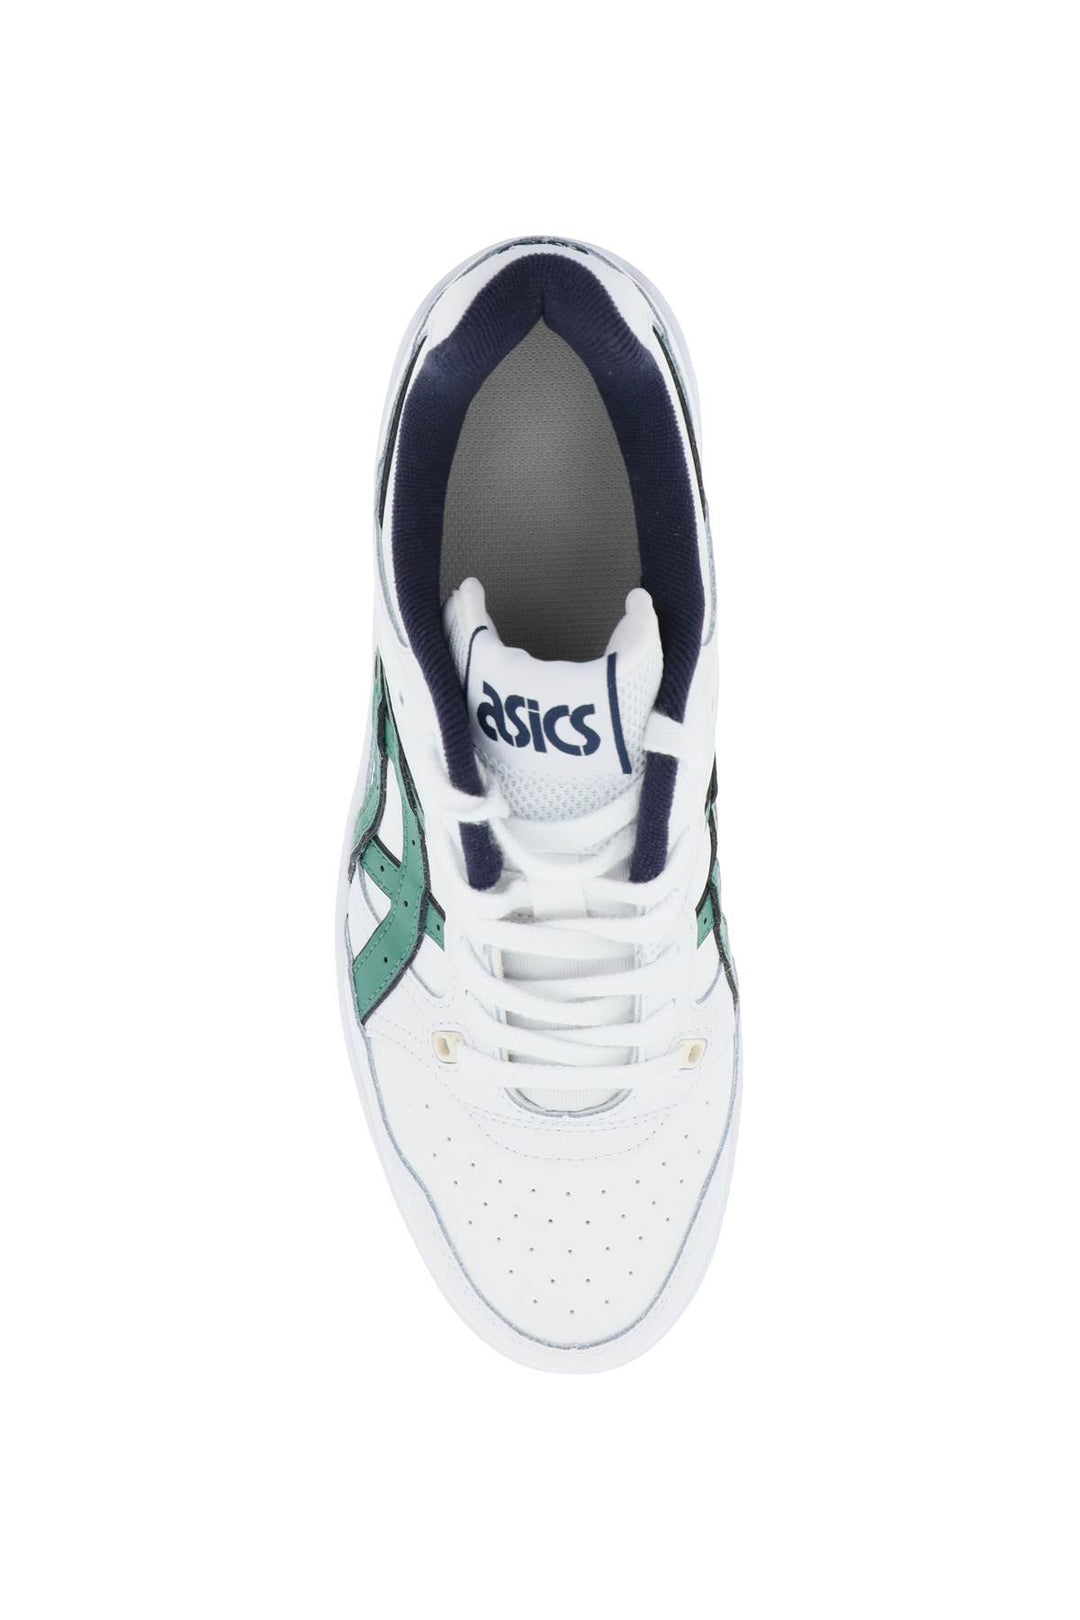 Asics ex89 sneakers-1